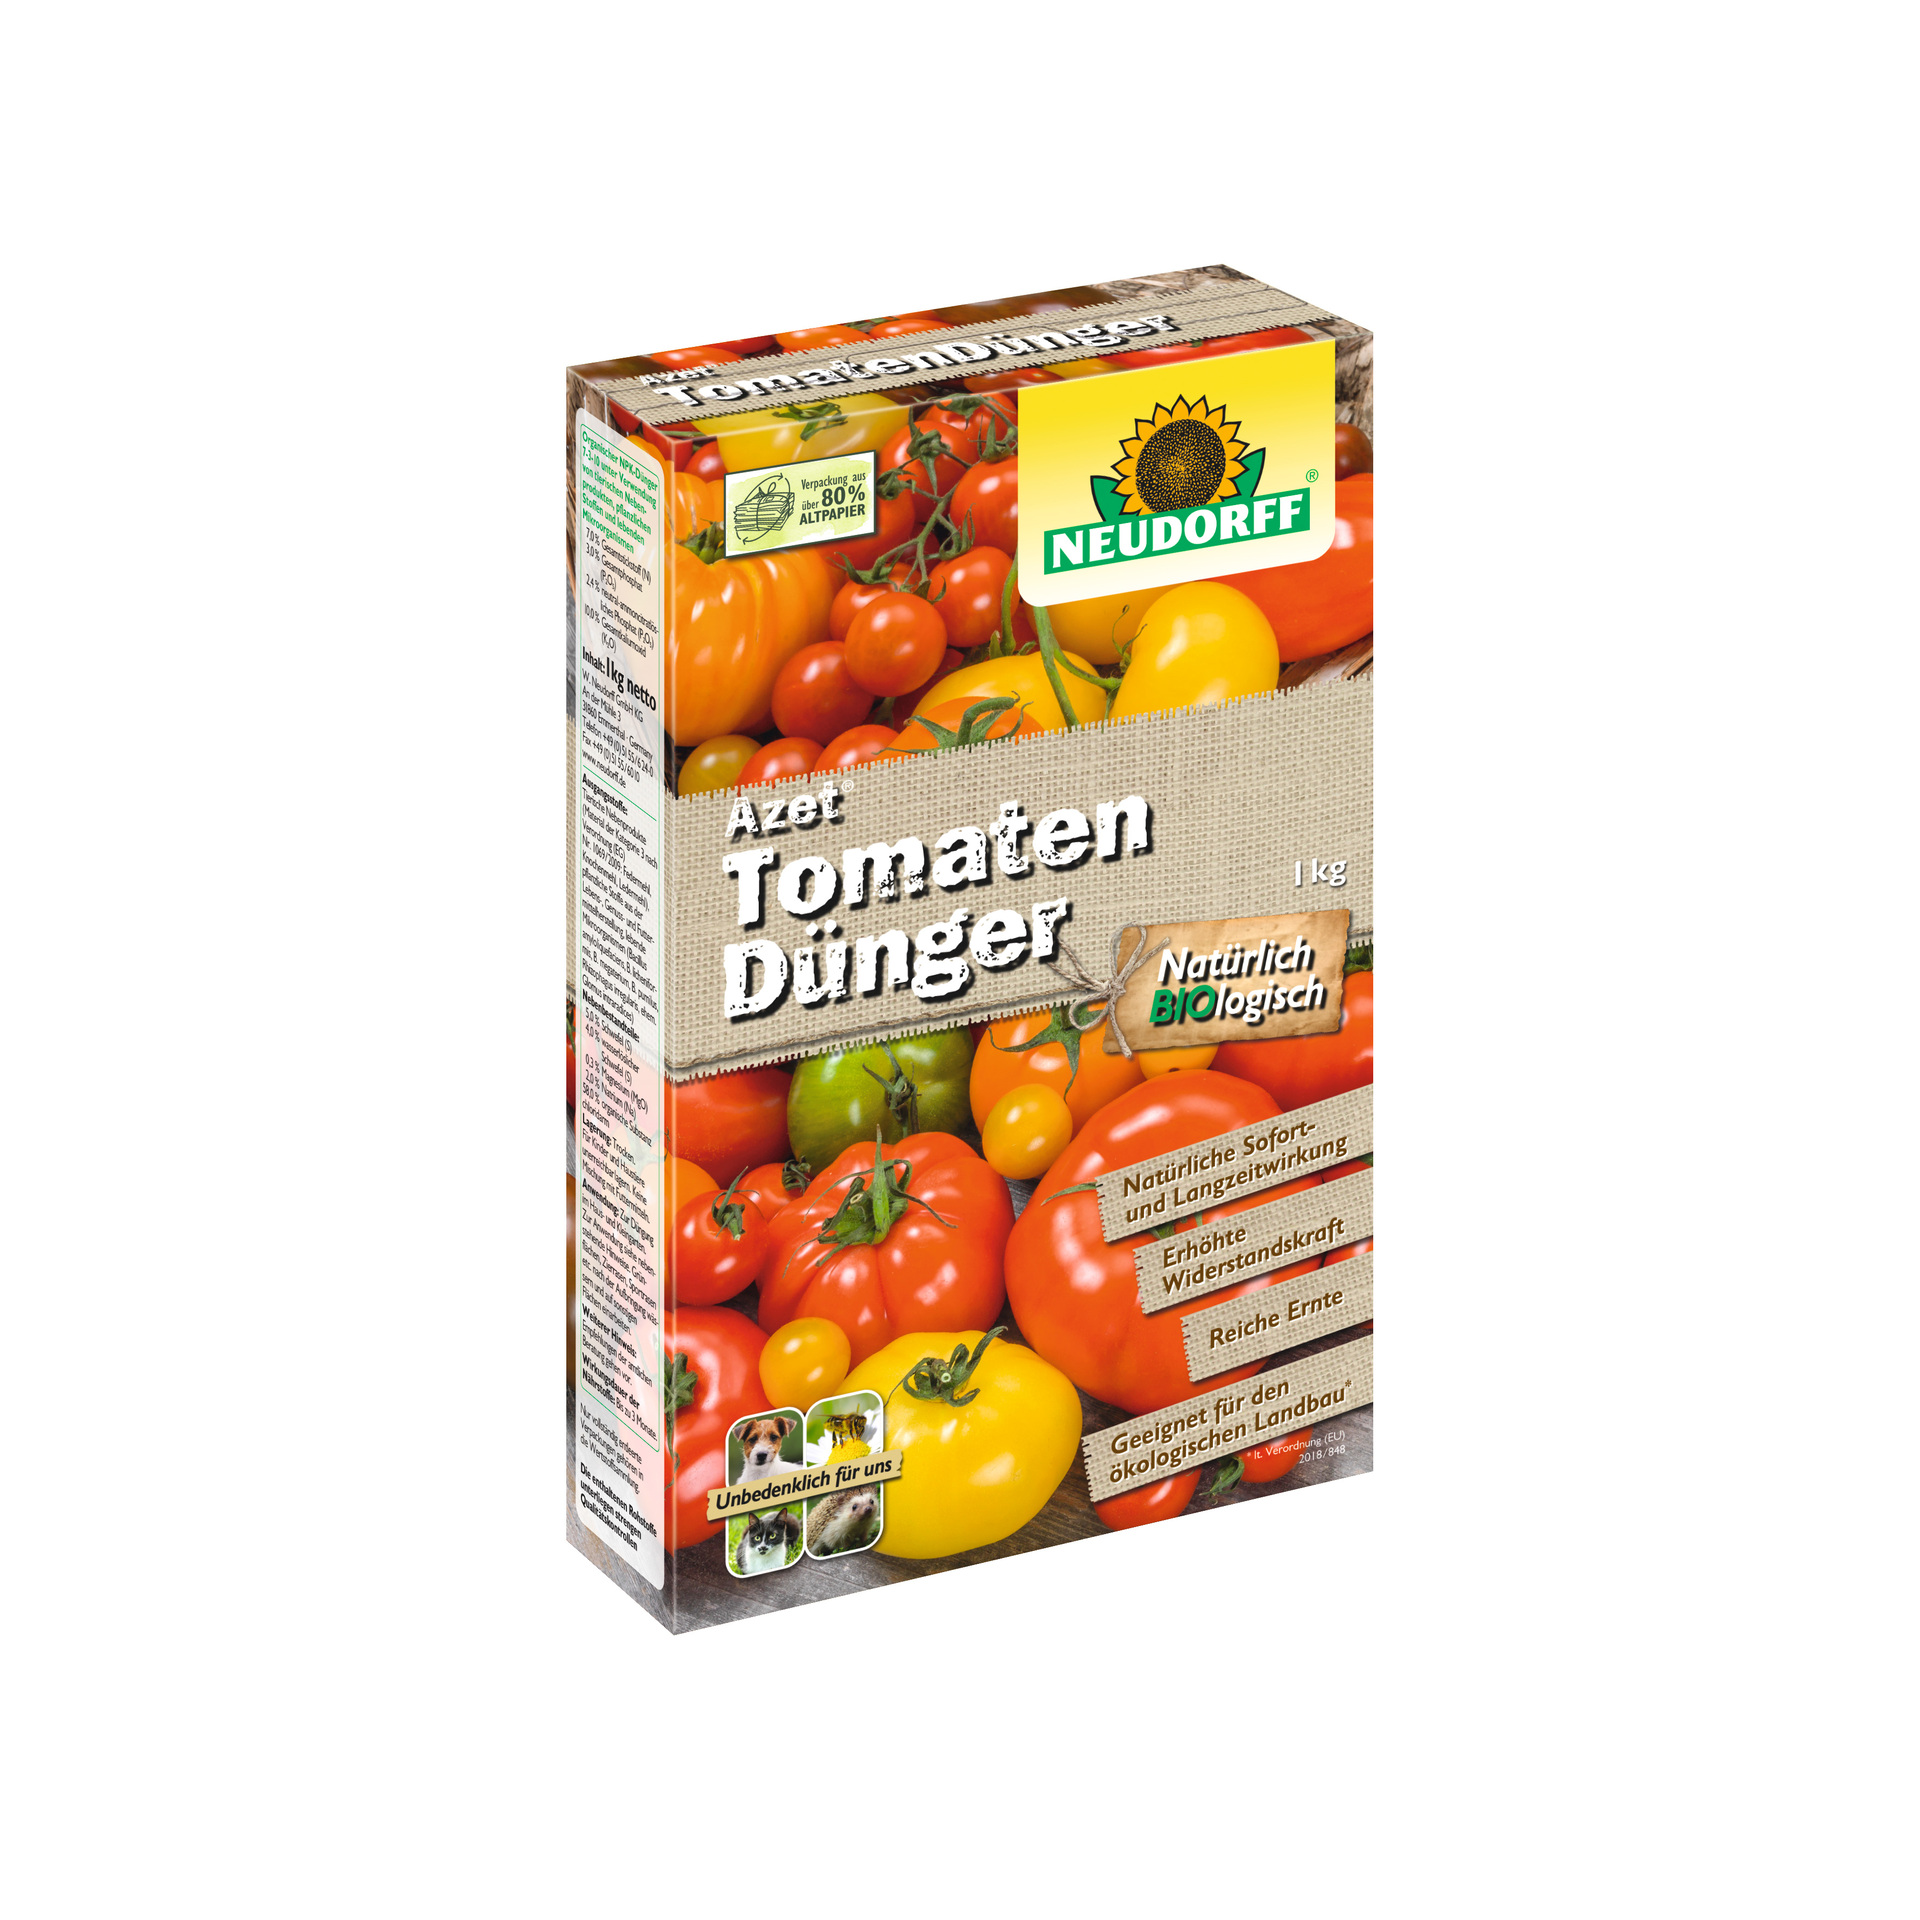 W. Neudorff GmbH KG Tomaten-Dünger 1 kg